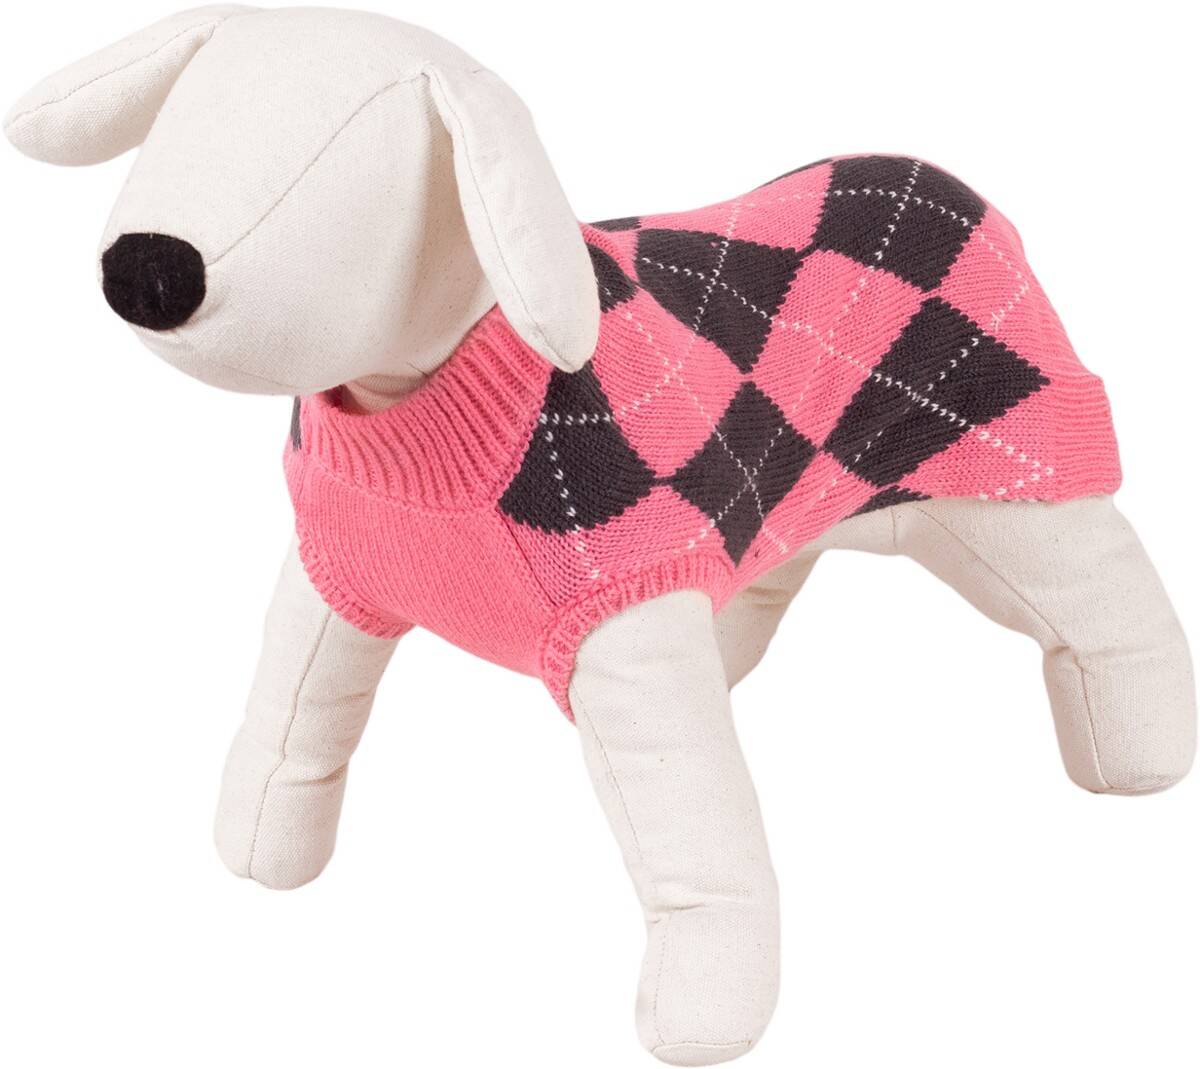 Dog Sweater / Rhomb Design - Happet 460M - Pink M - 25cm